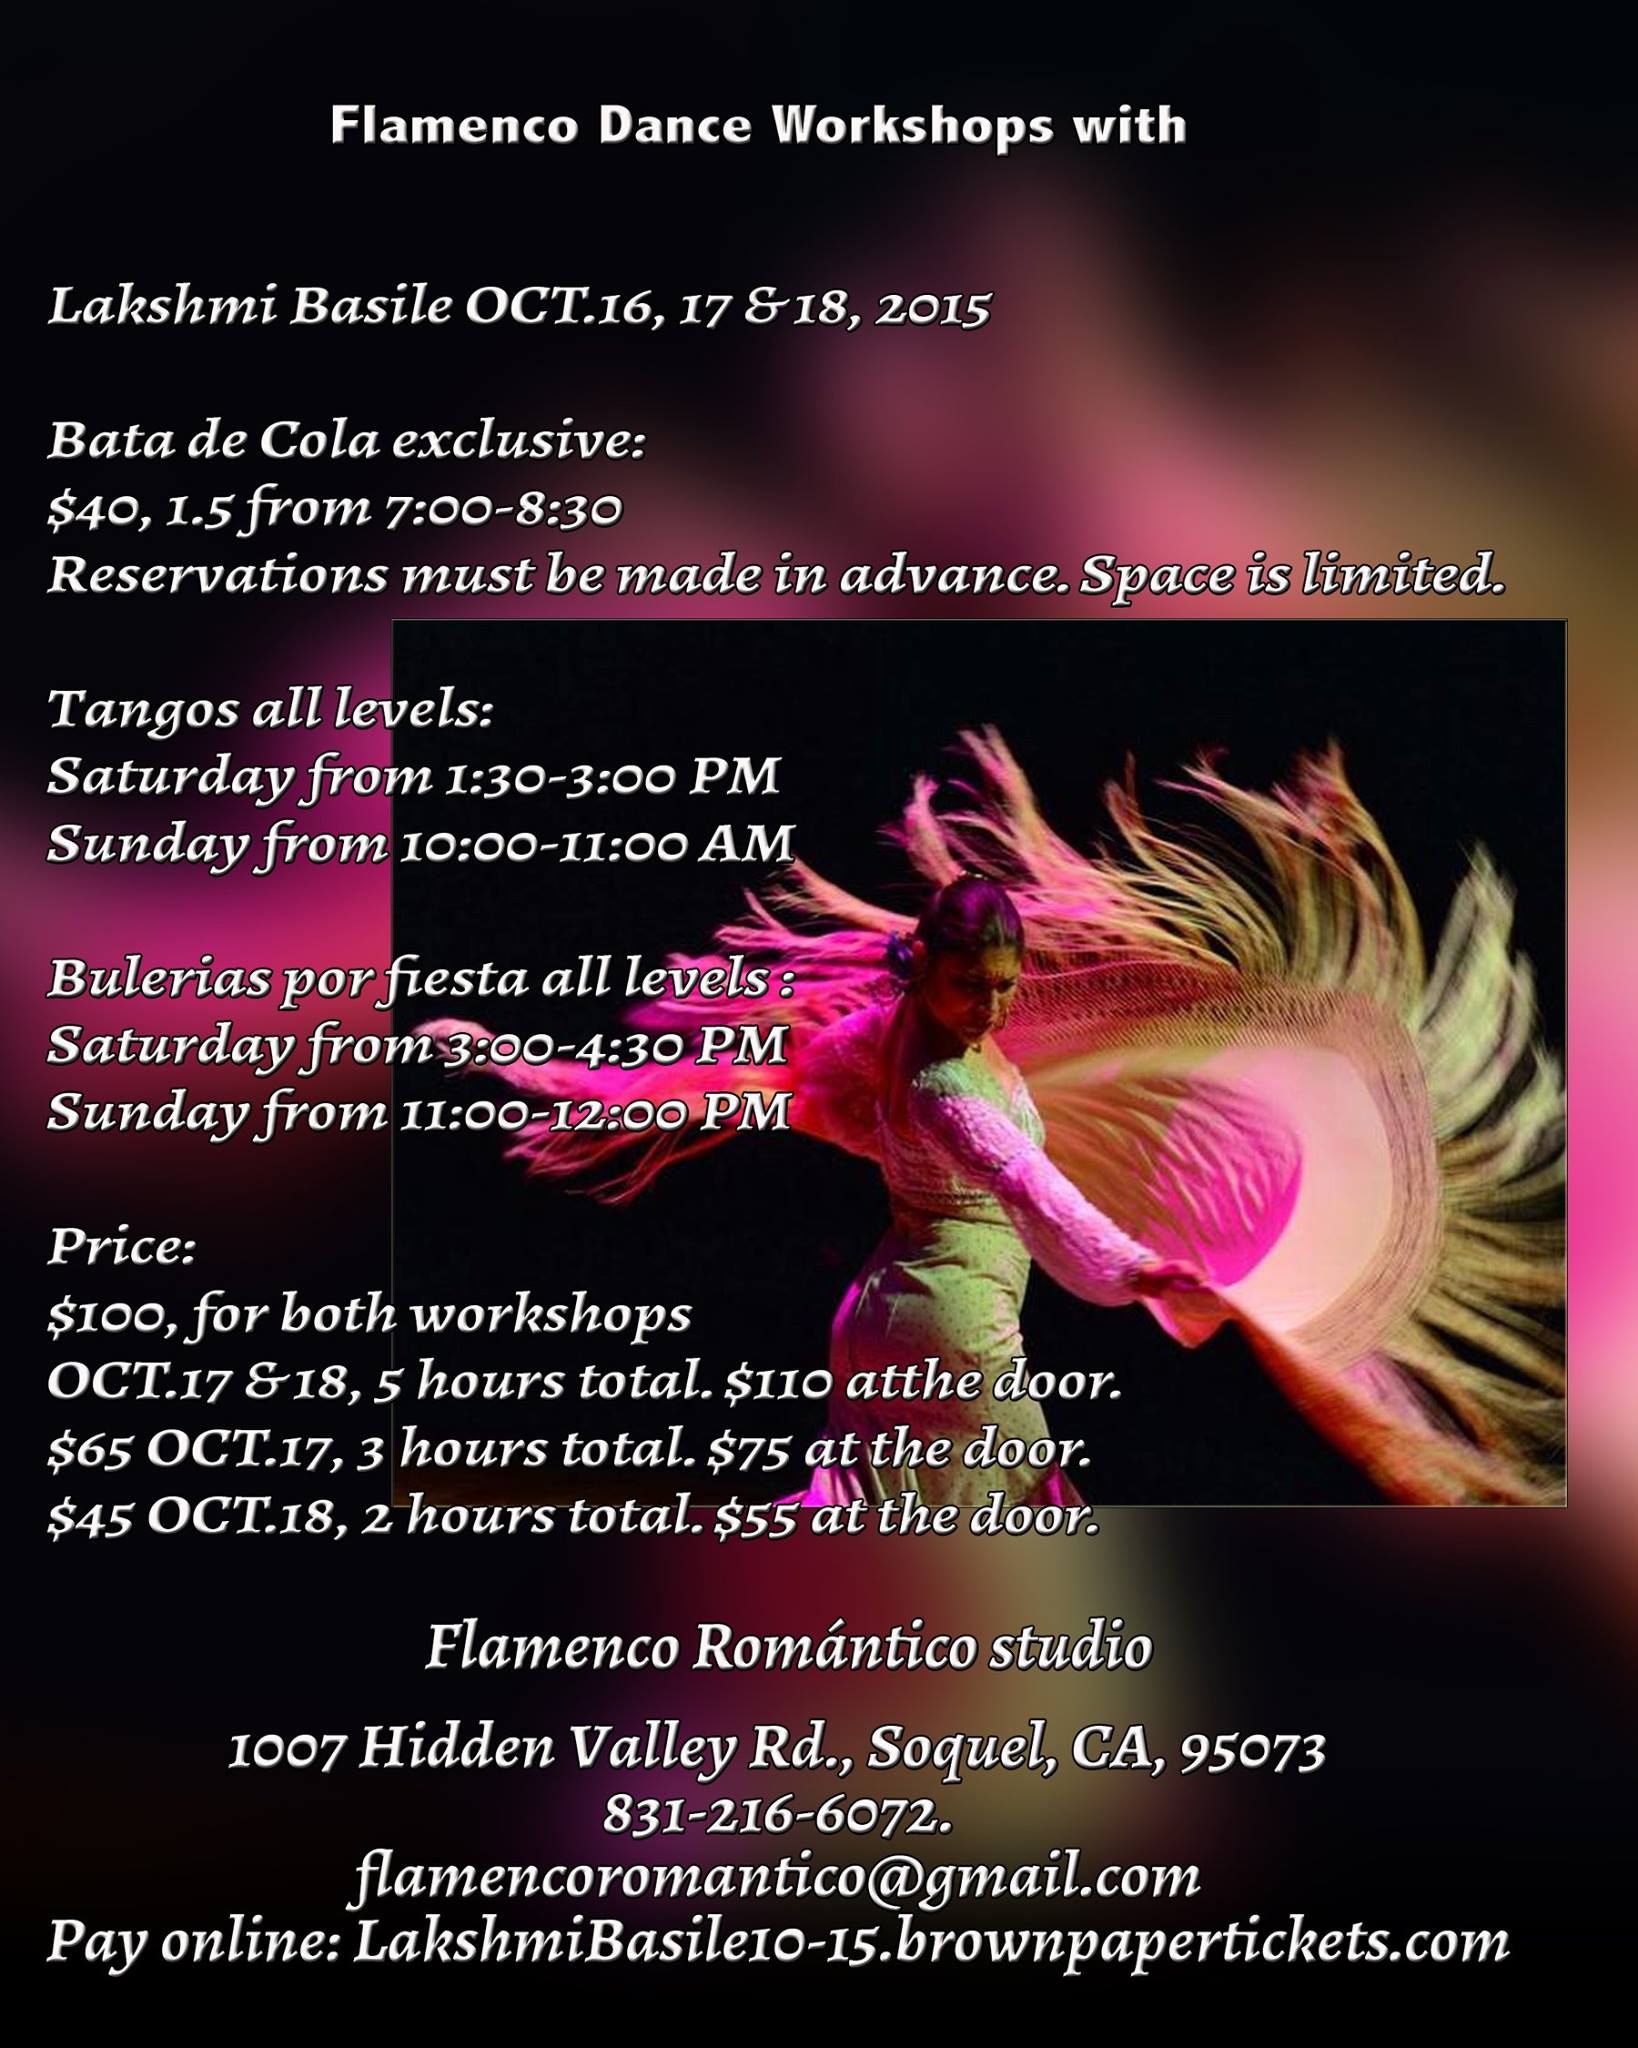 2015 Lakshmi Basile Flamenco dance workshop